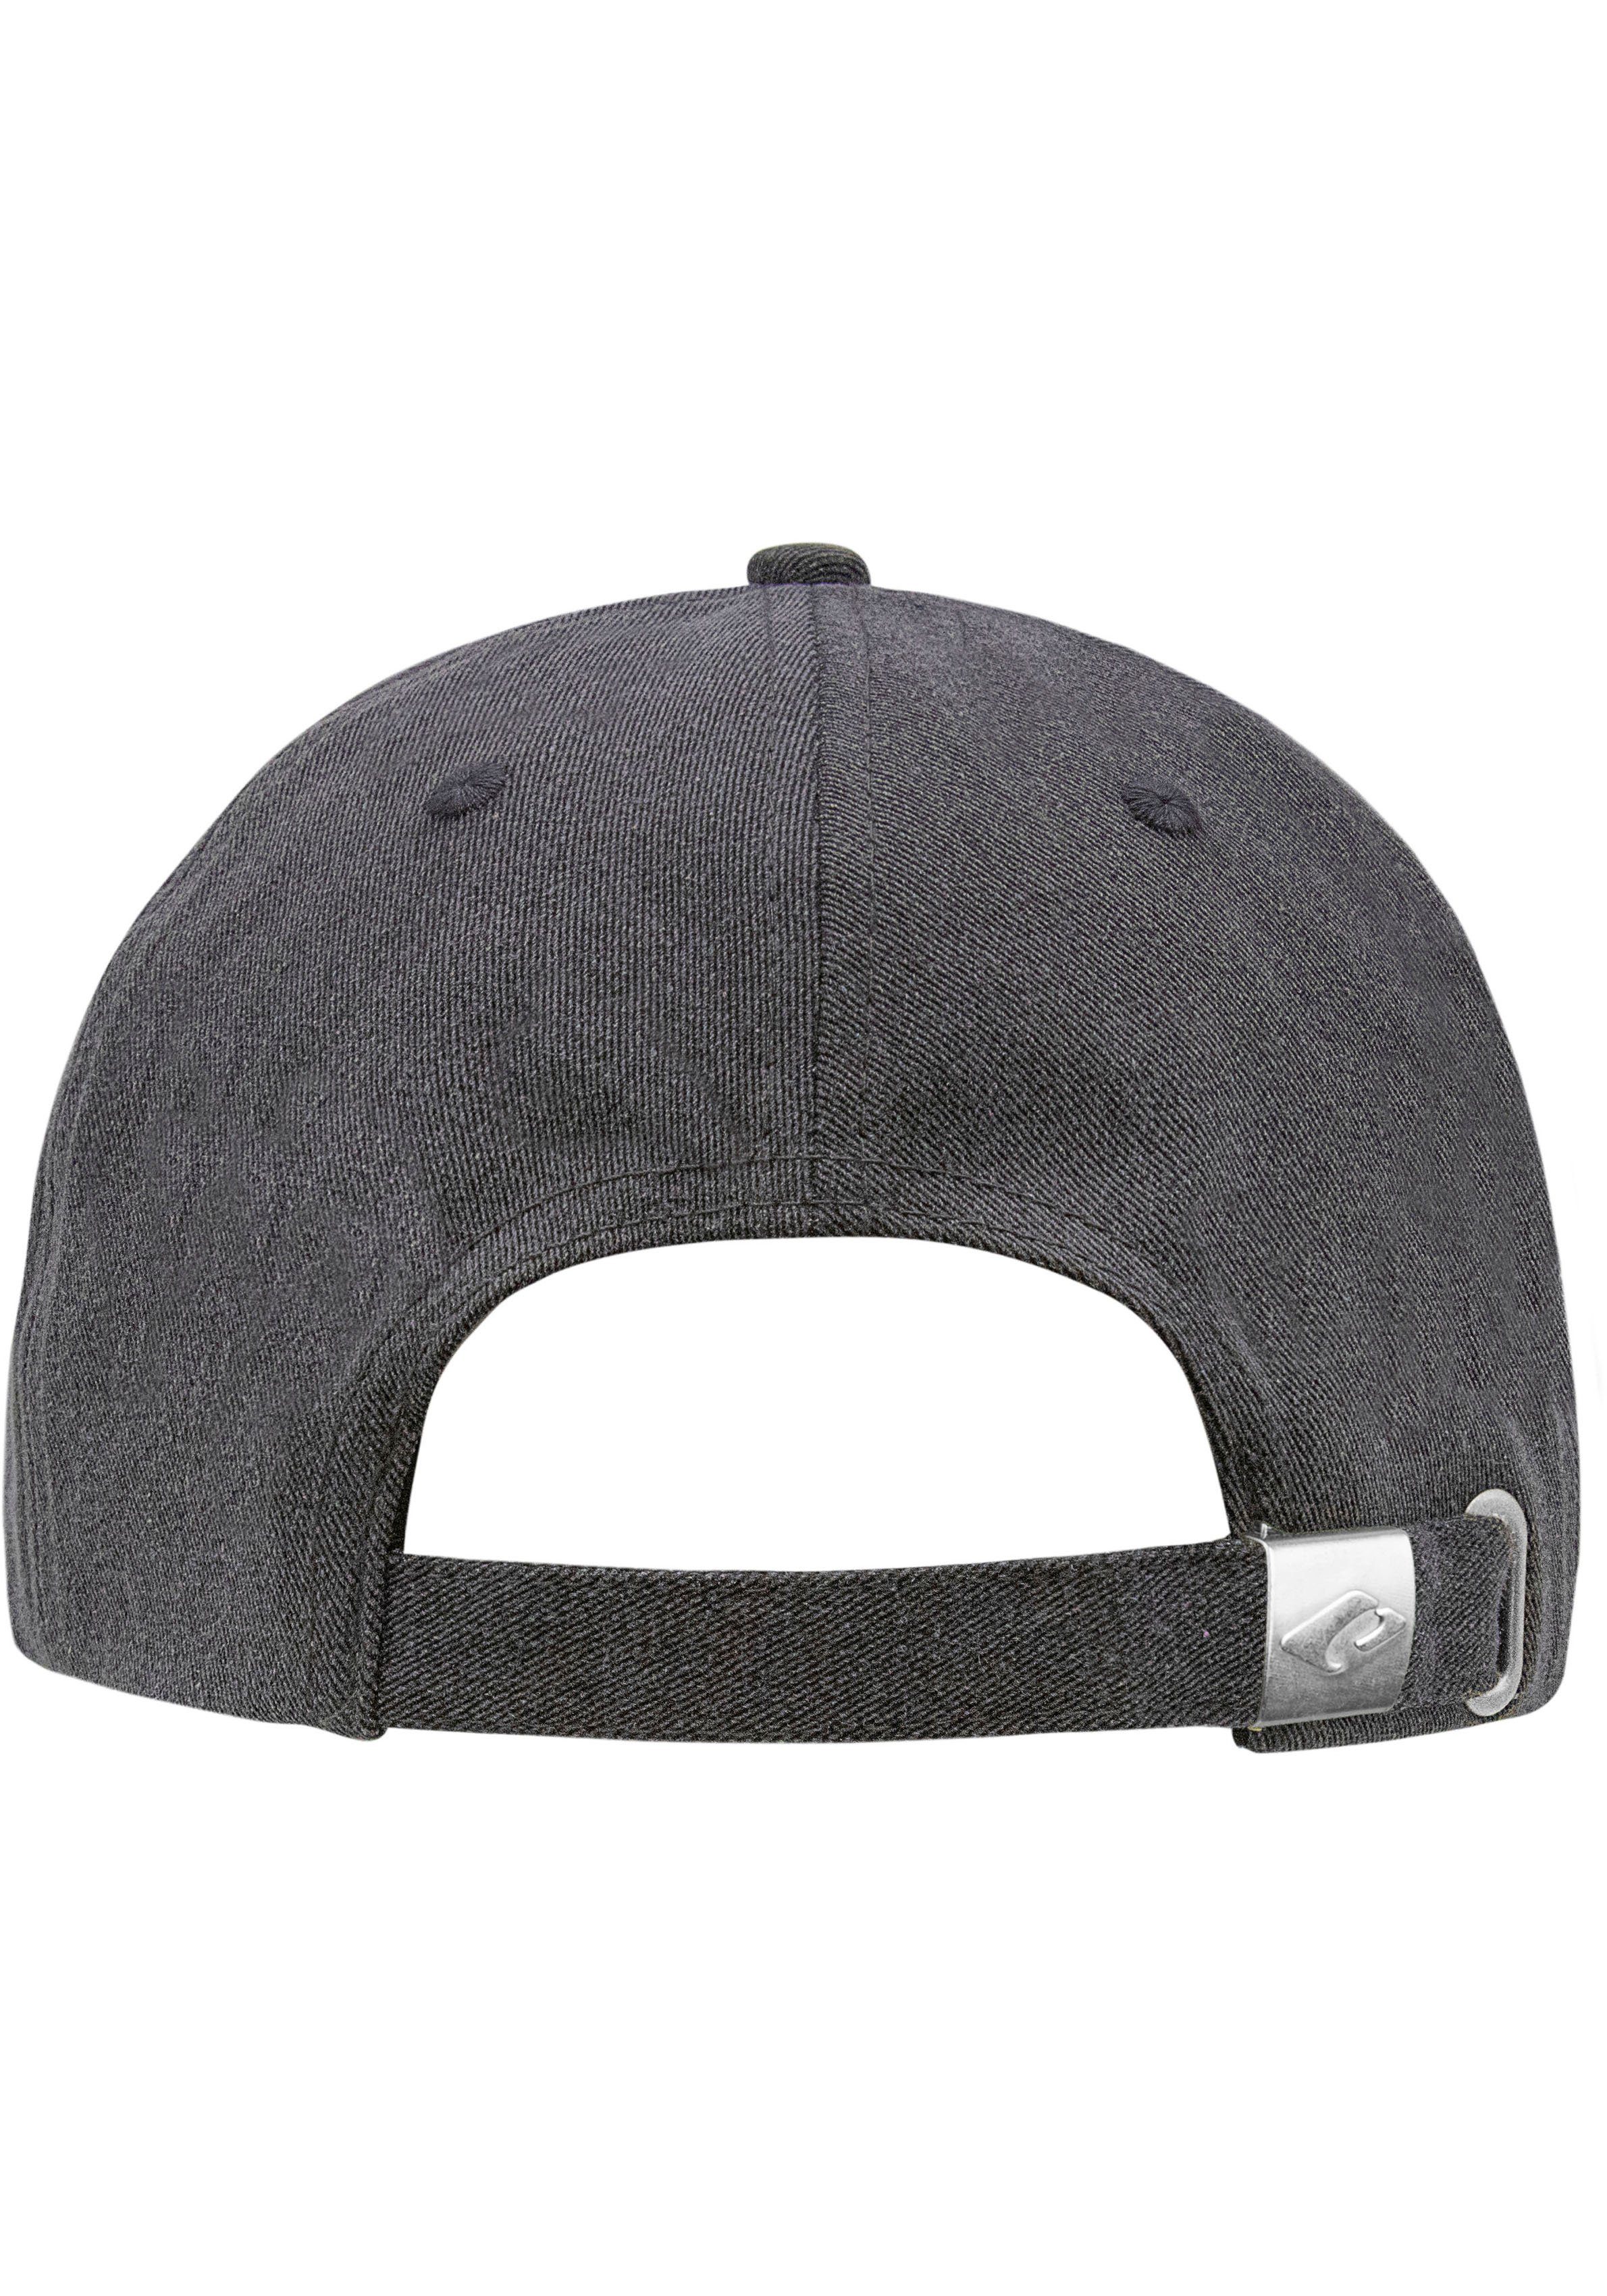 Baseball Hat chillouts Cap Arklow dunkelgrau